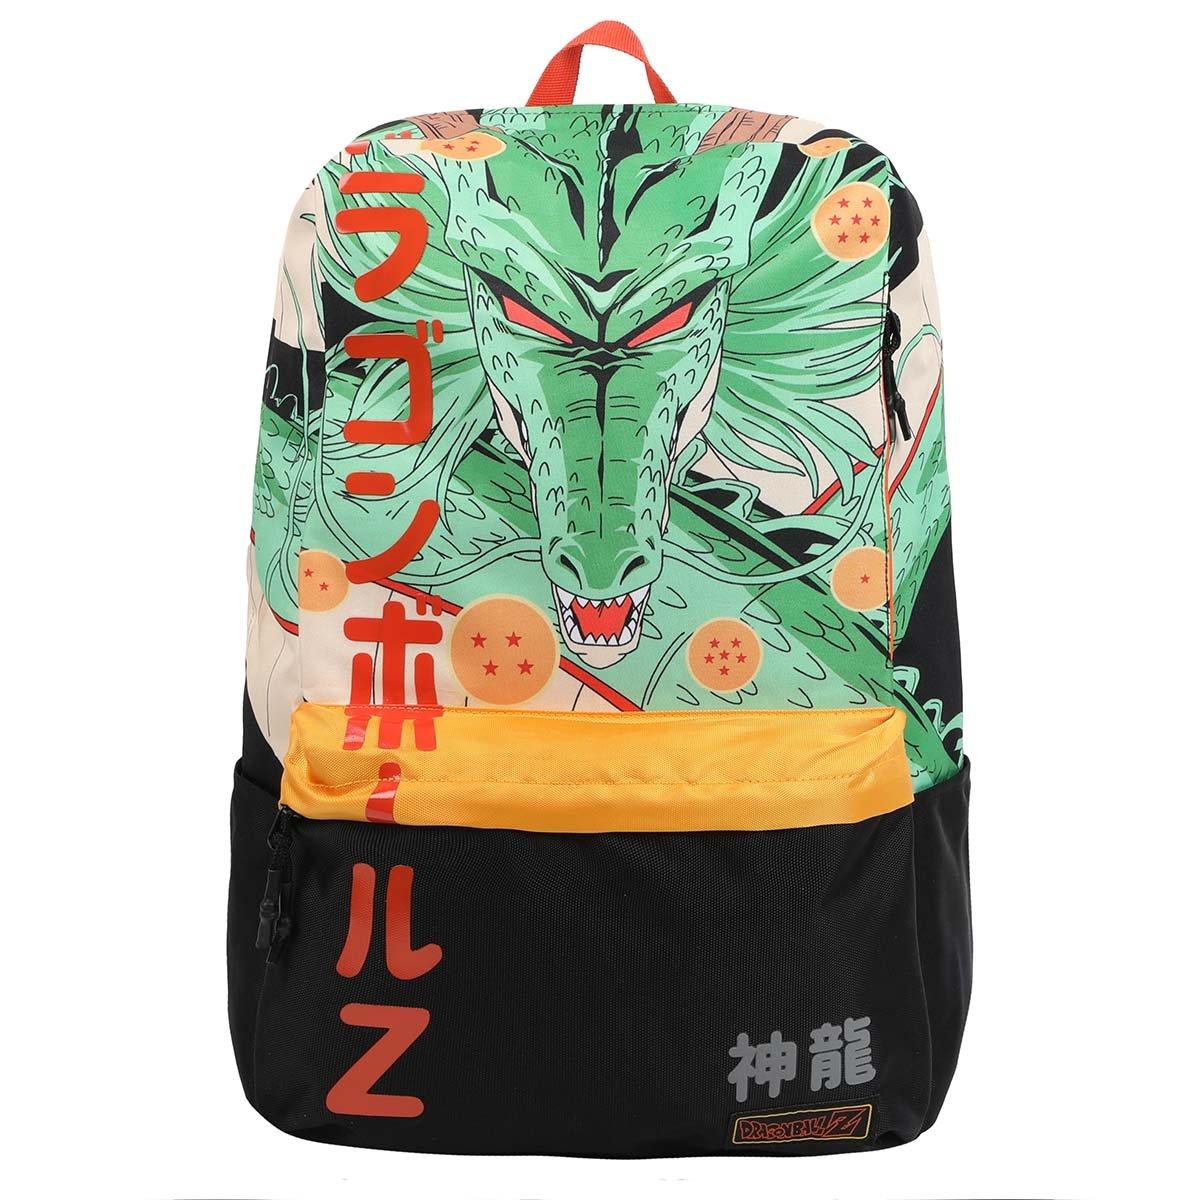 Dragon Ball Z Backpacks